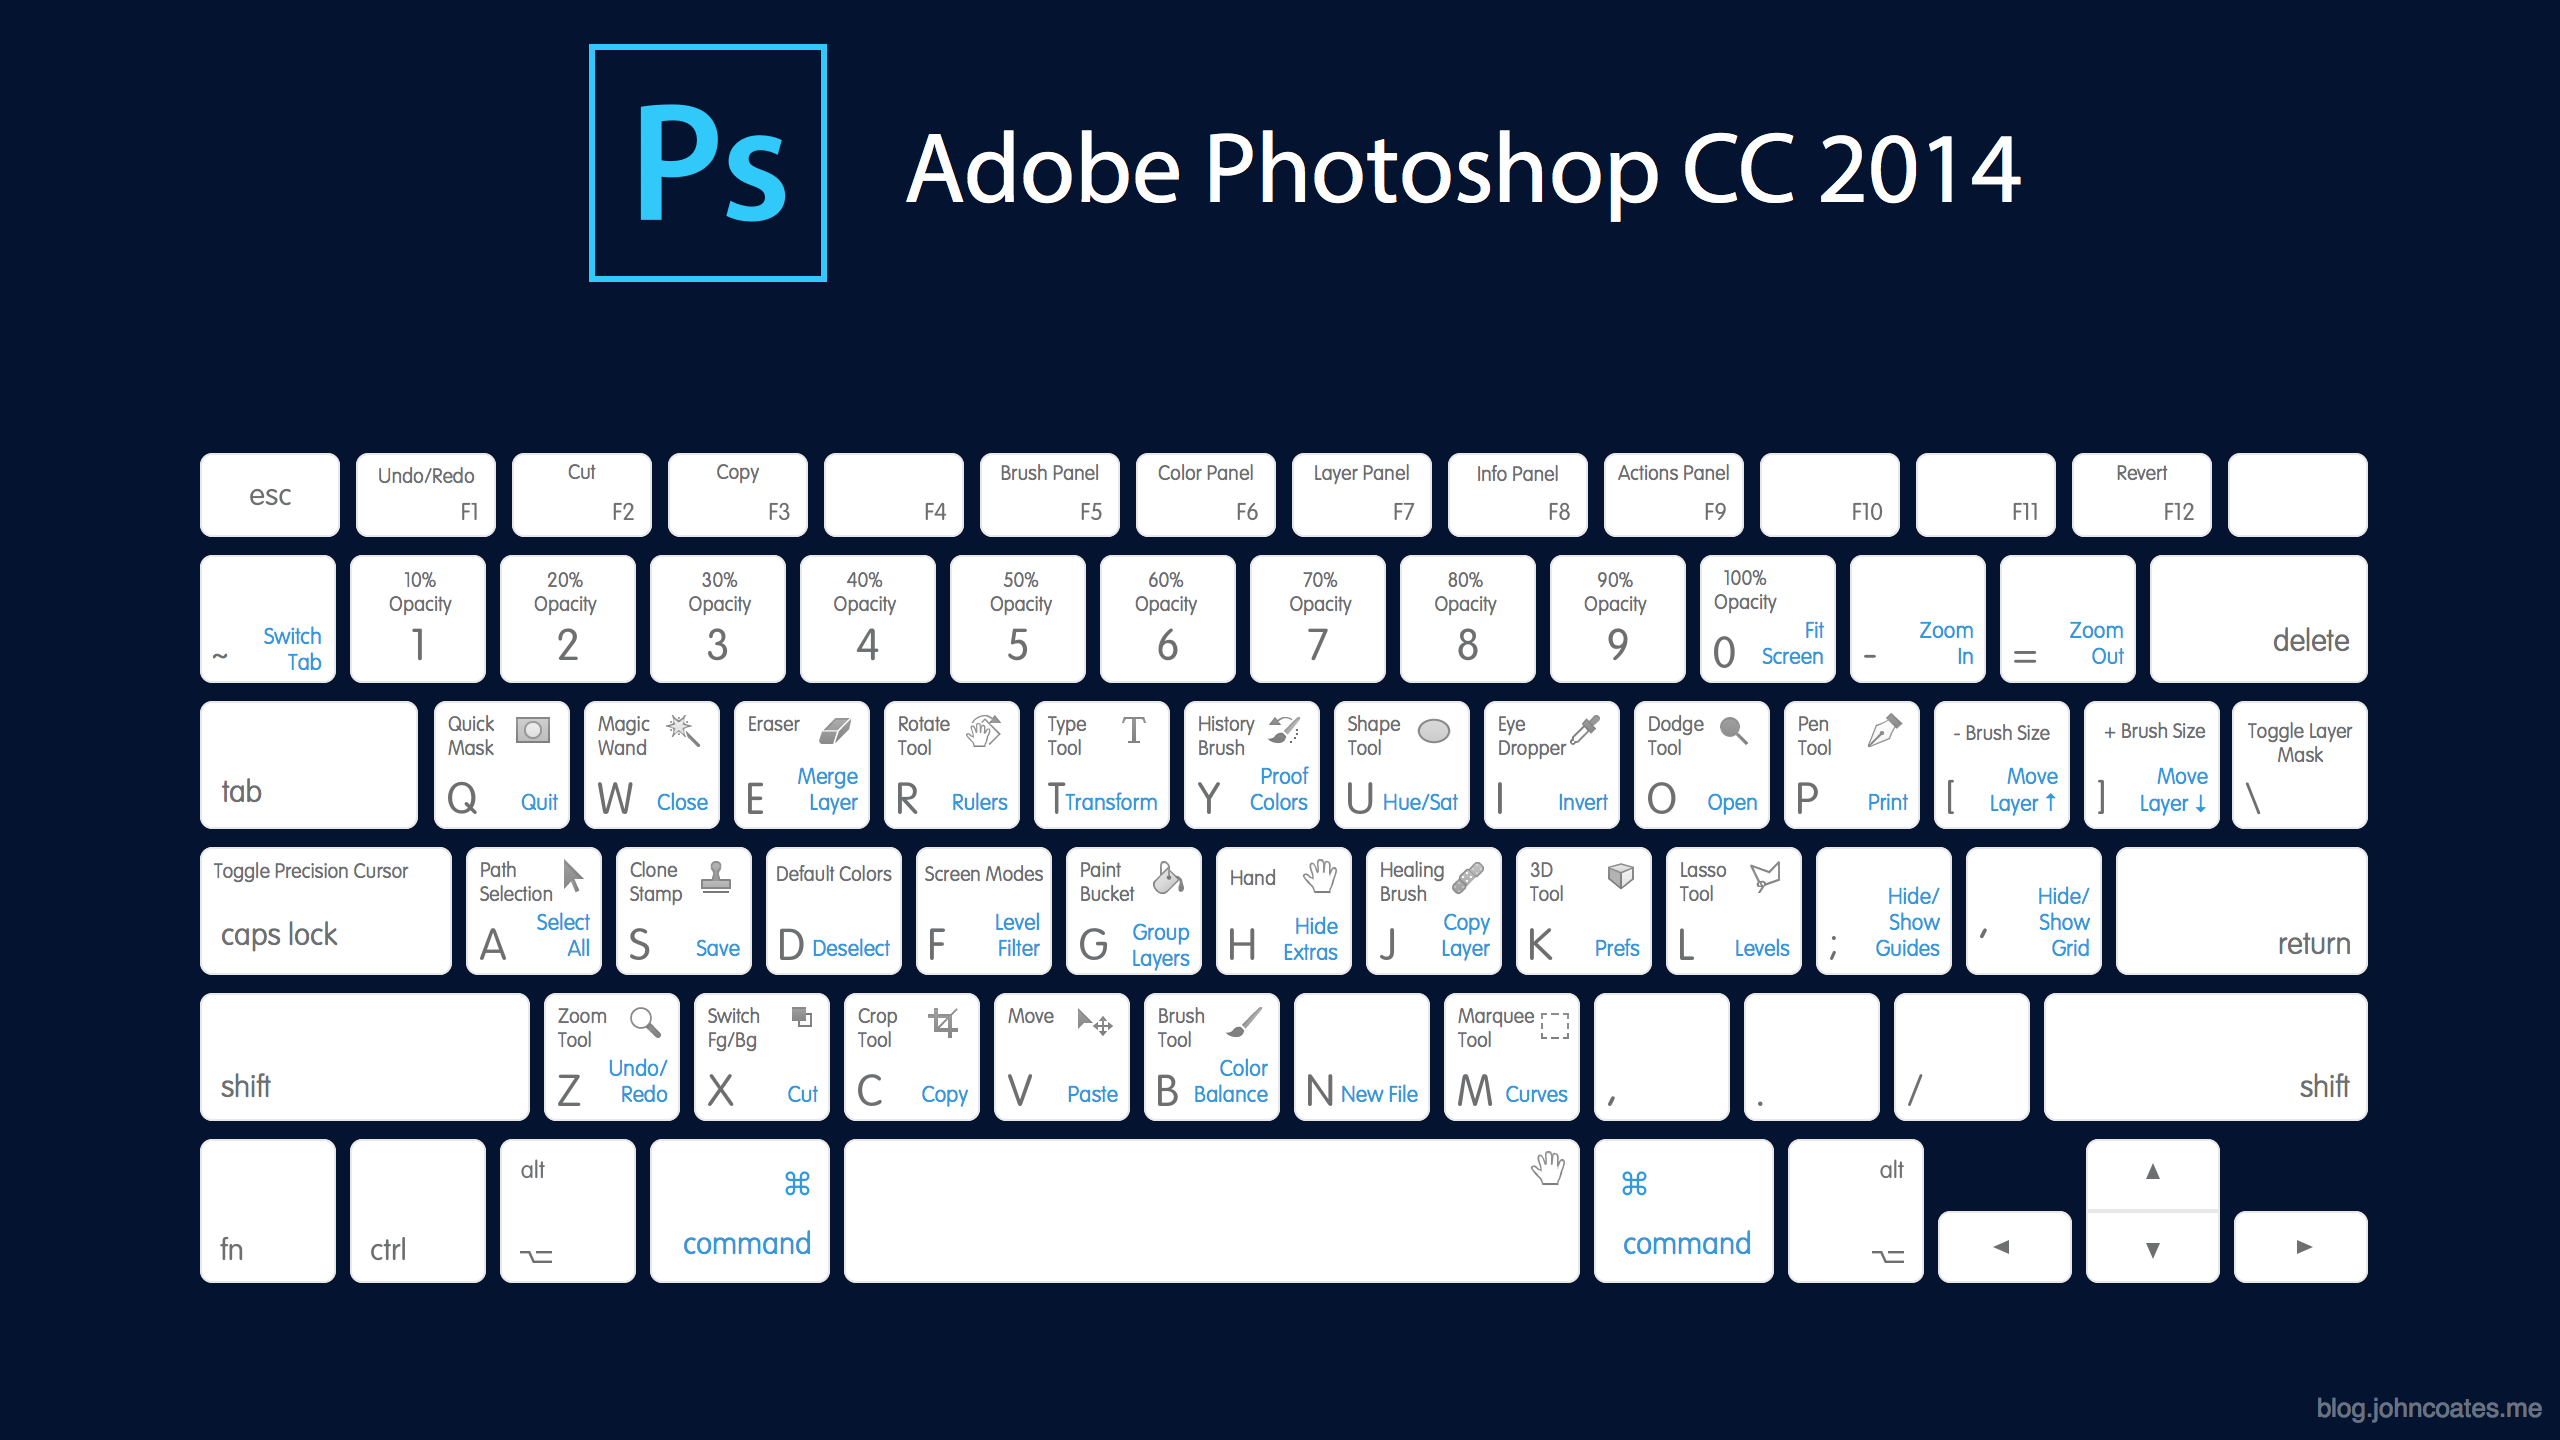 Adobe-Photoshop-CC-2014-Cheat-Sheet-Mac.png